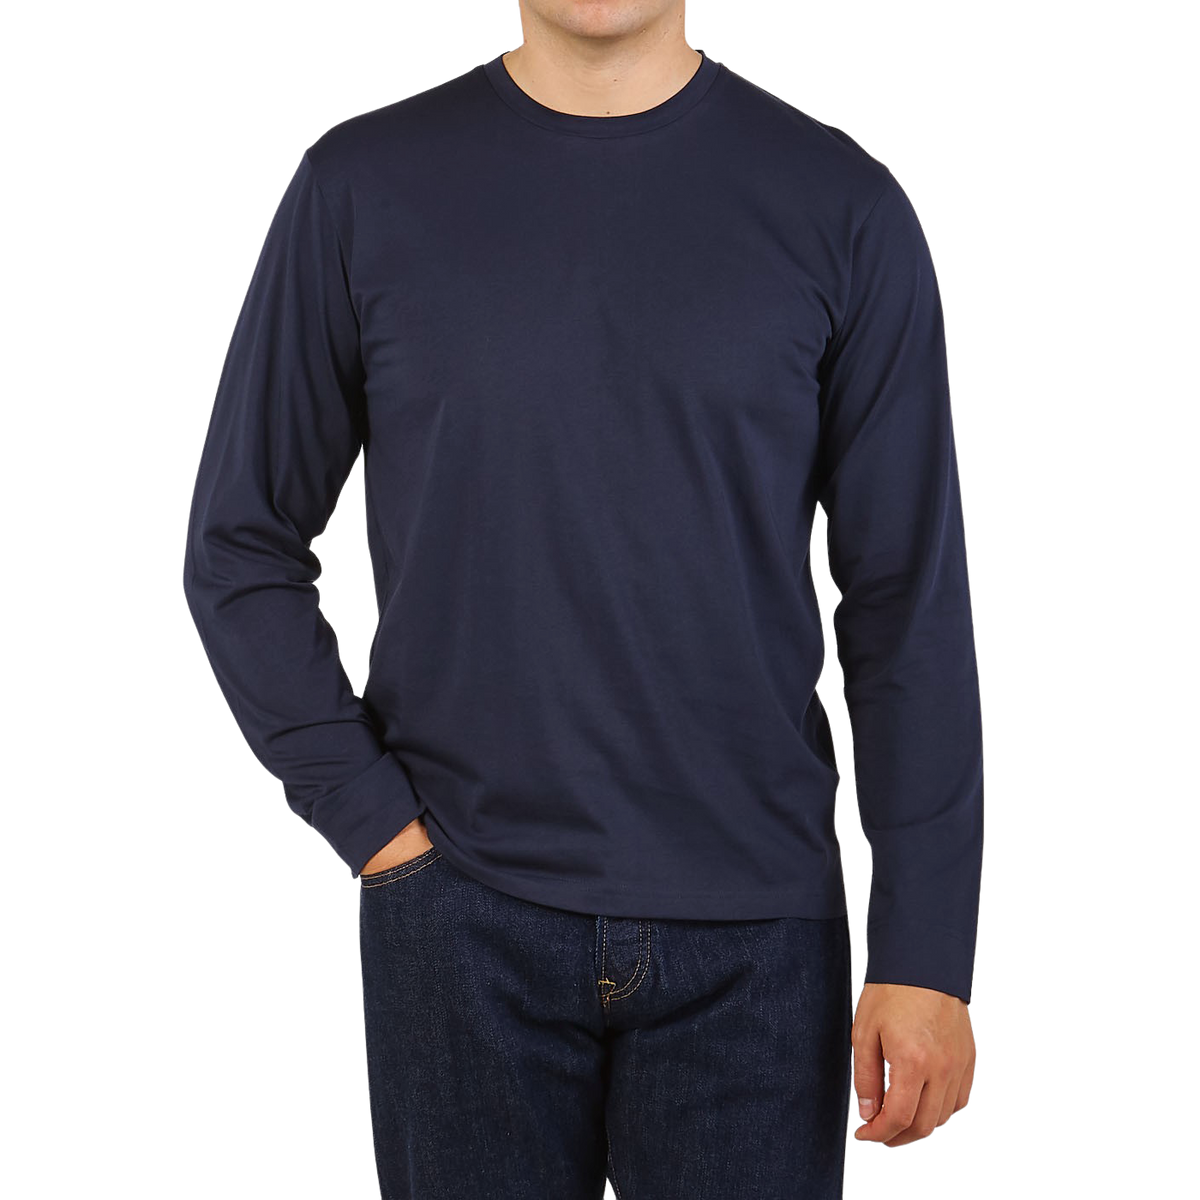 Susnpel Navy Blue Cotton Riviera Long Sleeve T-Shirt Front